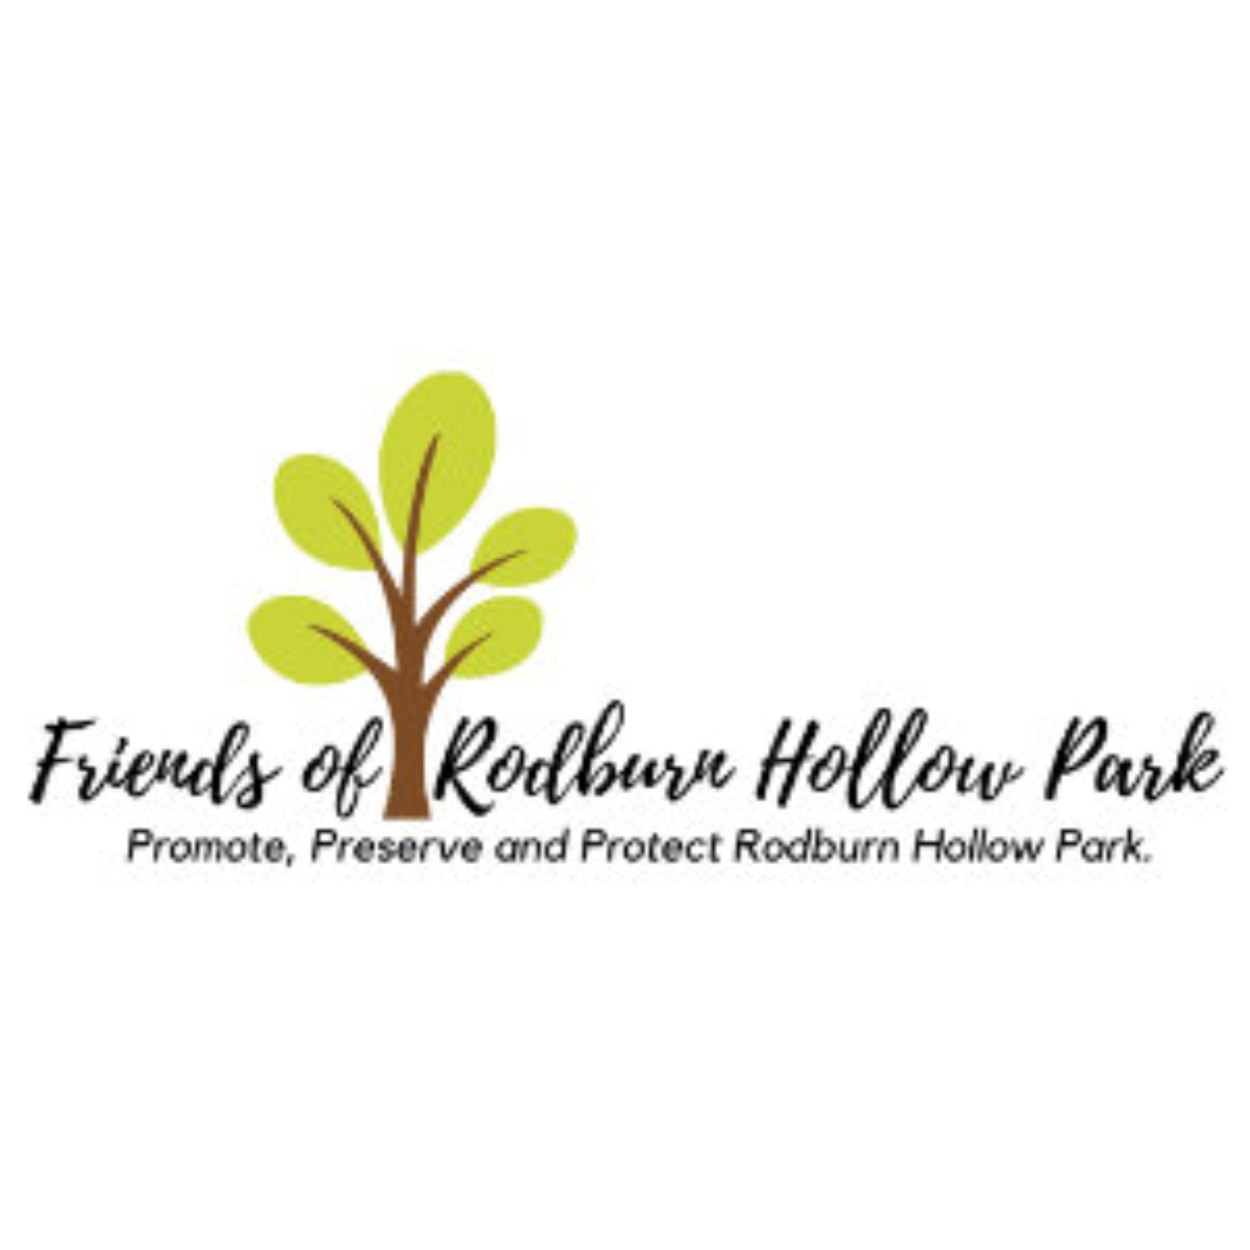 Friends of the Rodburn Hollow Park logo